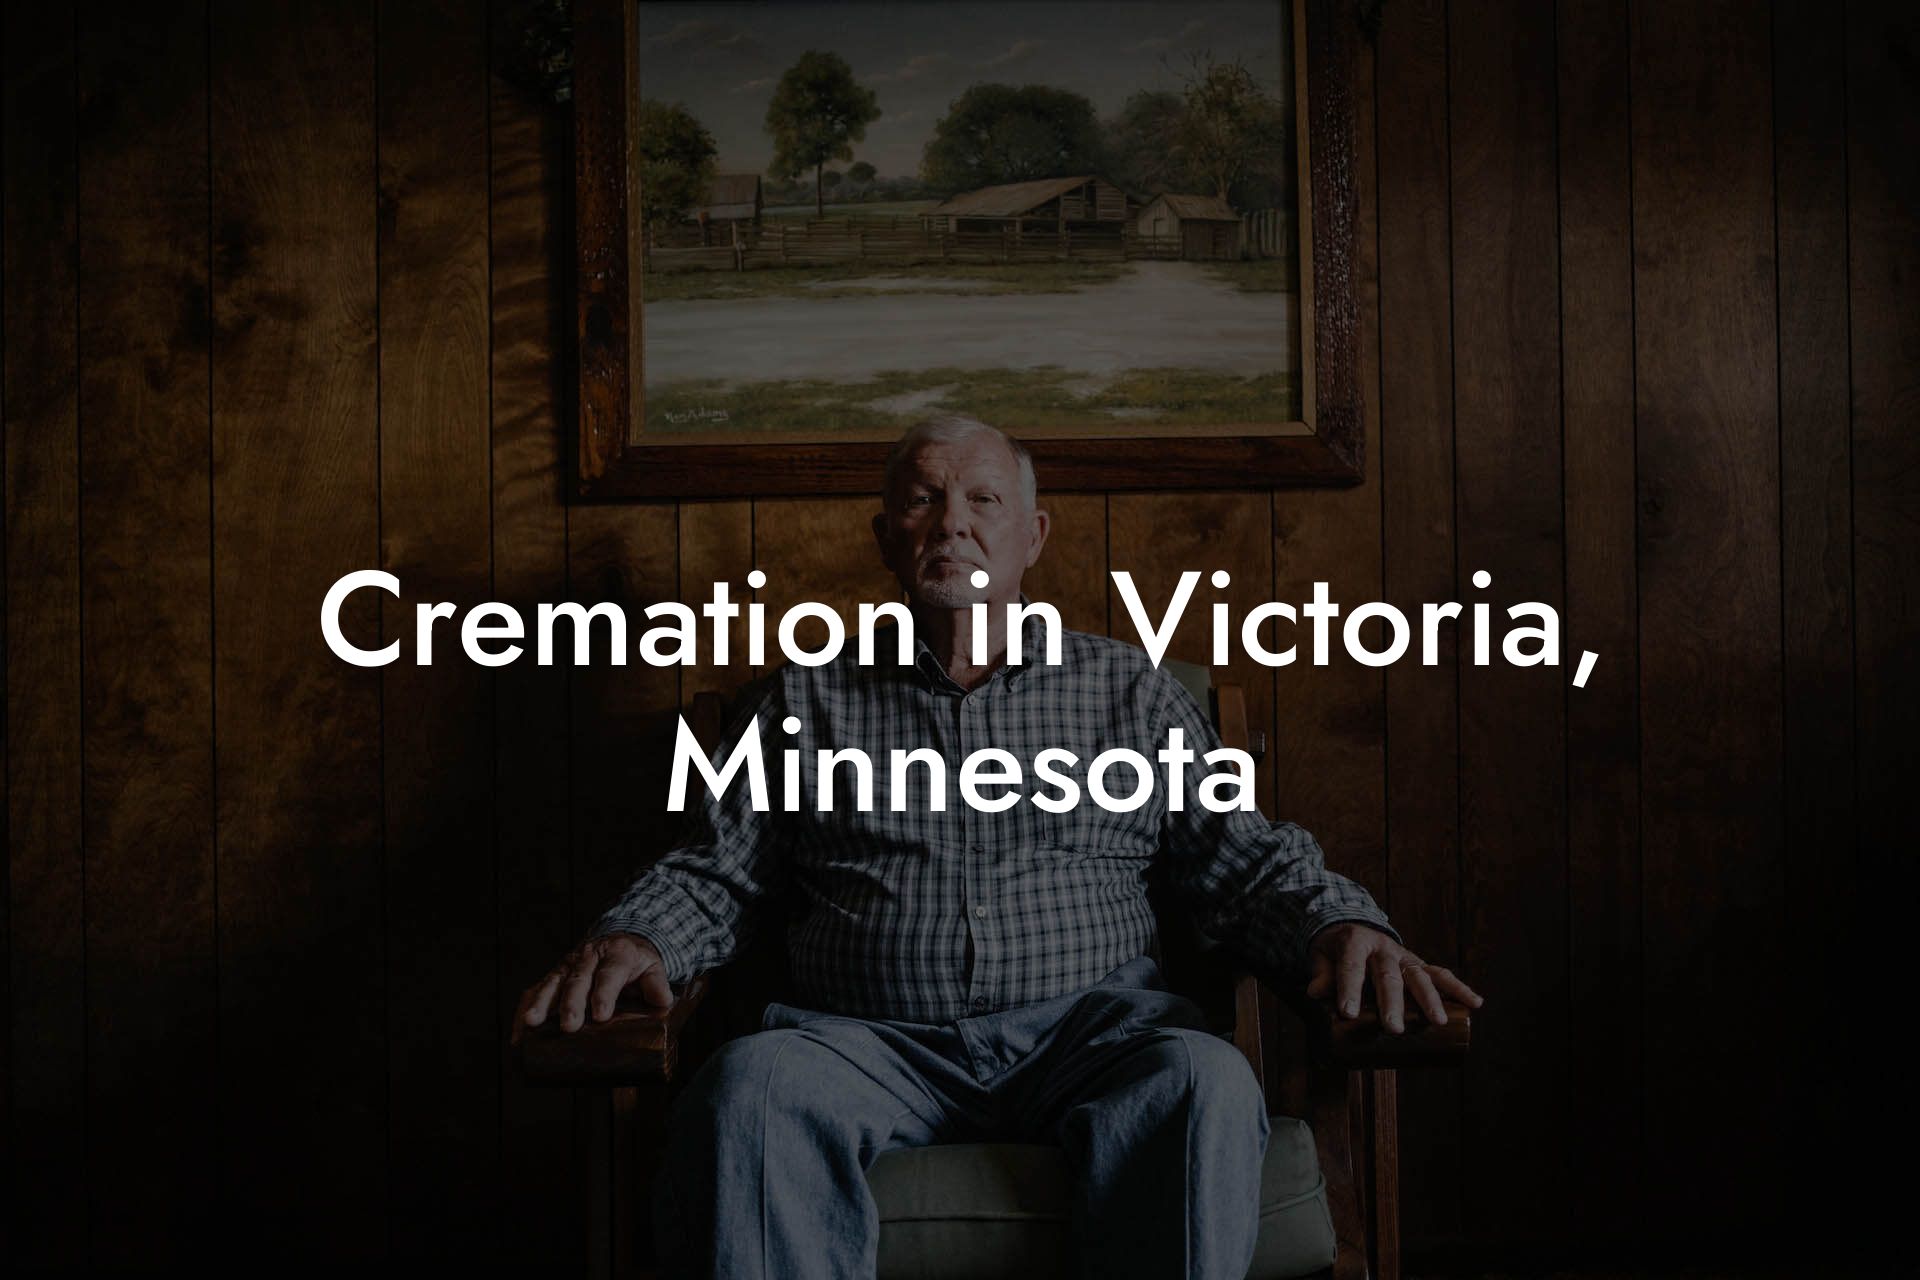 Cremation in Victoria, Minnesota